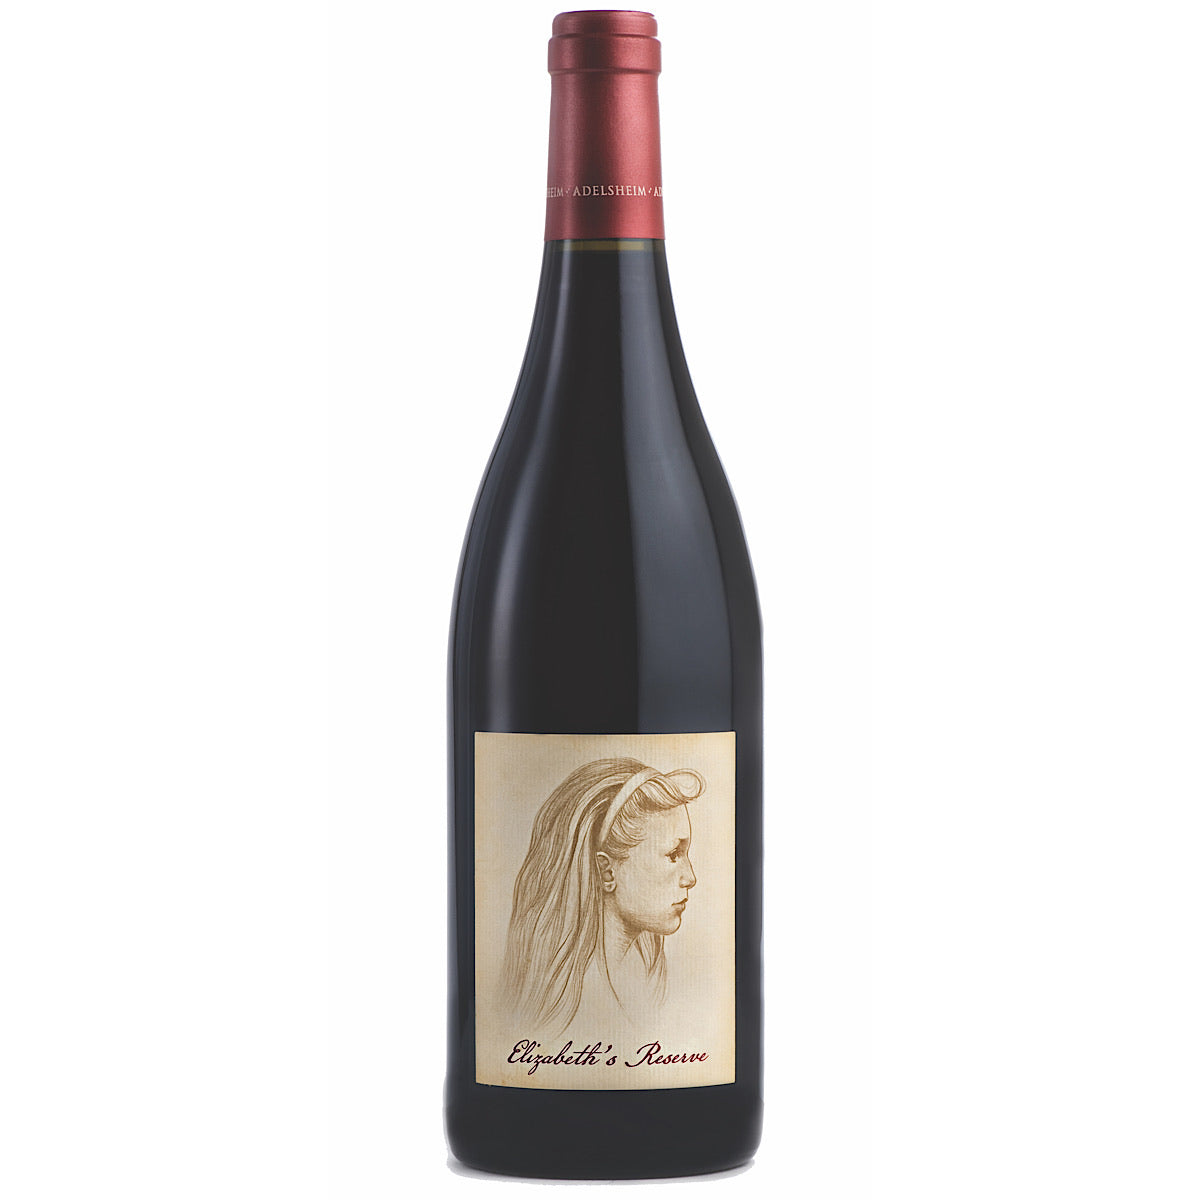 Adelsheim ‘Elizabeth’s Reserve’ Pinot Noir 6 Bottle Case